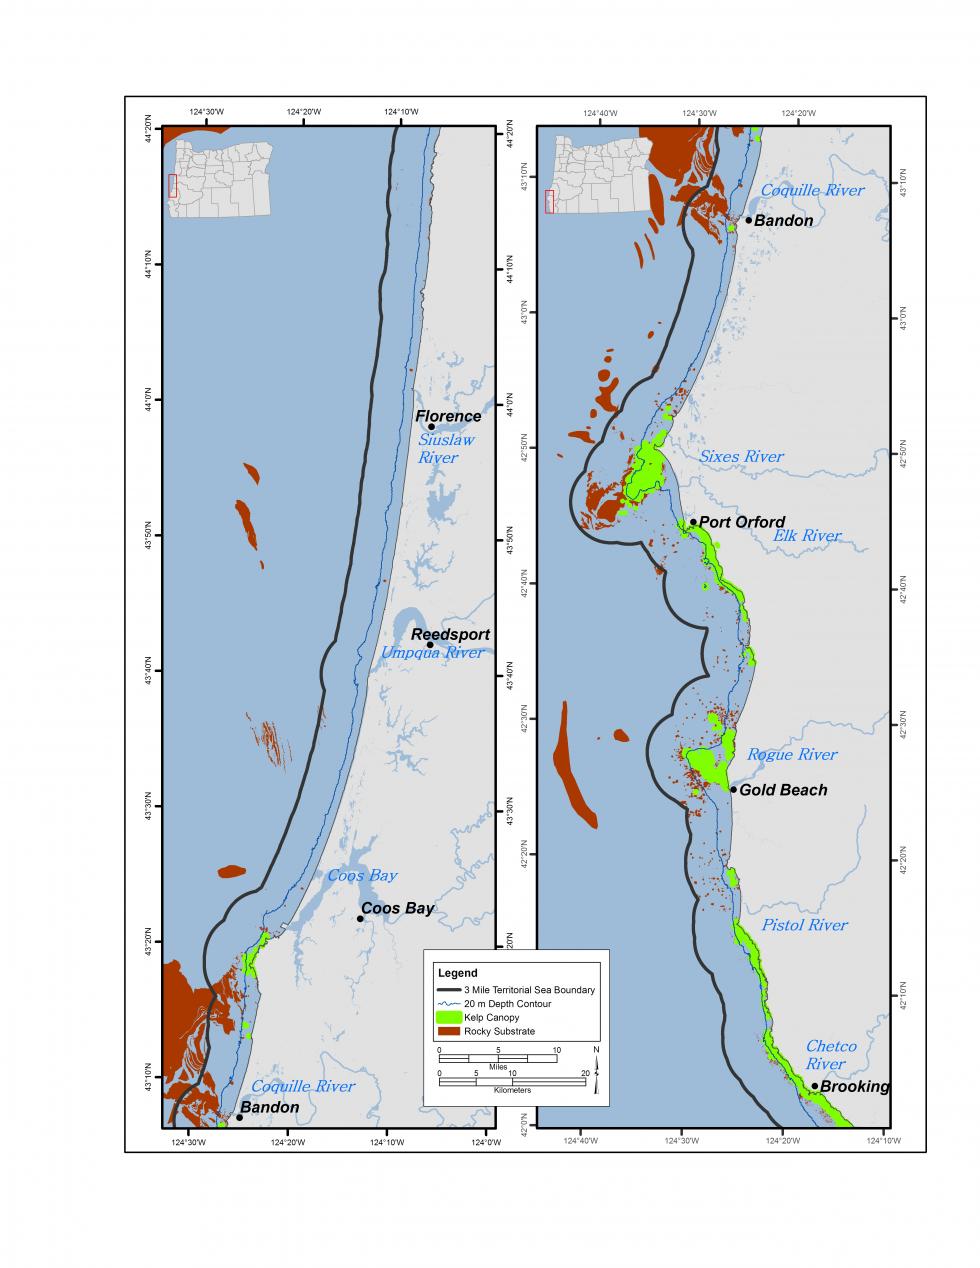 Maximum extent of kelp beds on south Oregon coast